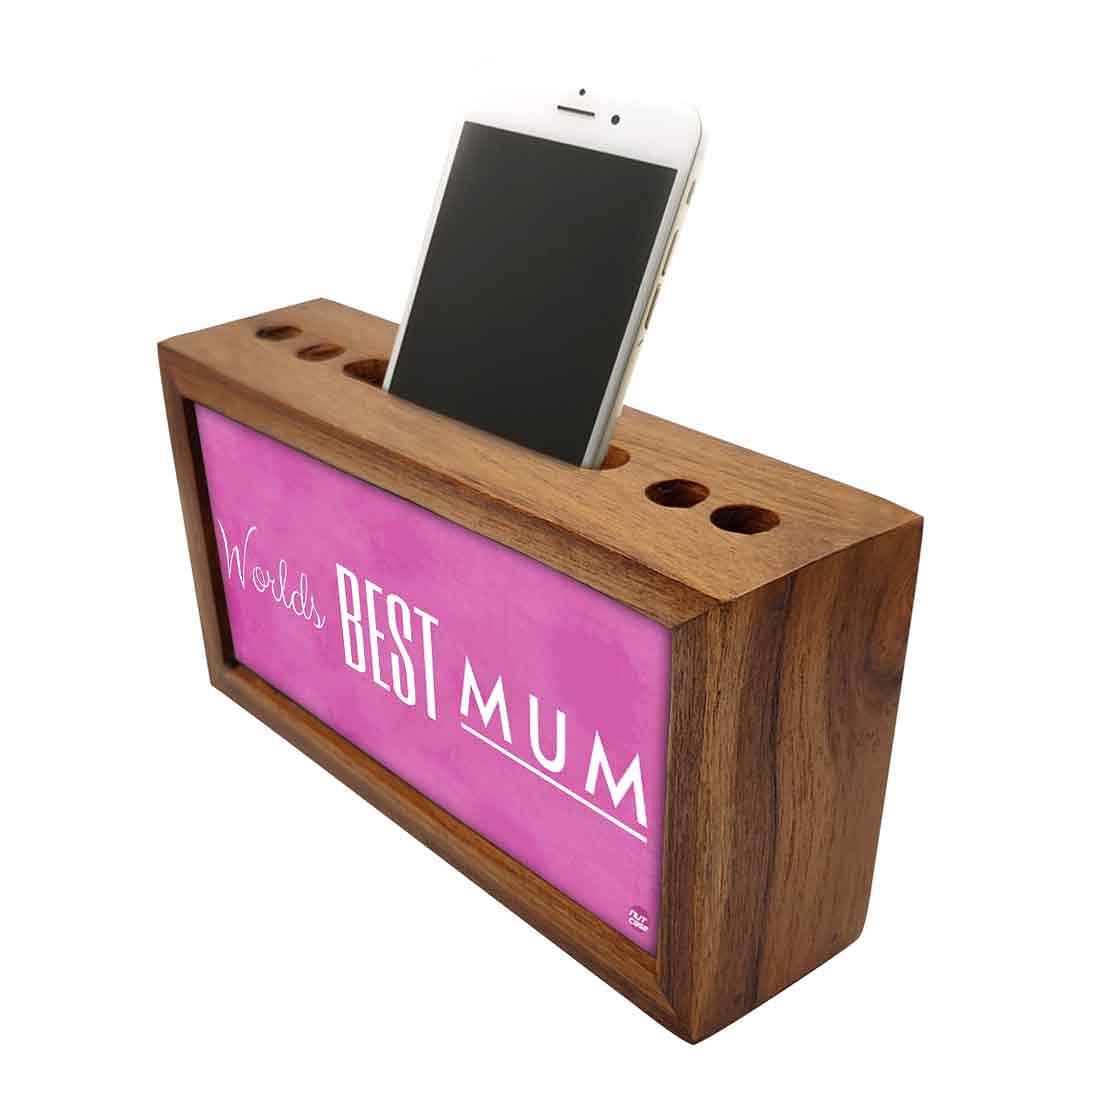 Wooden desktop organiser Pen Mobile Stand - Worlds Best Mum Nutcase